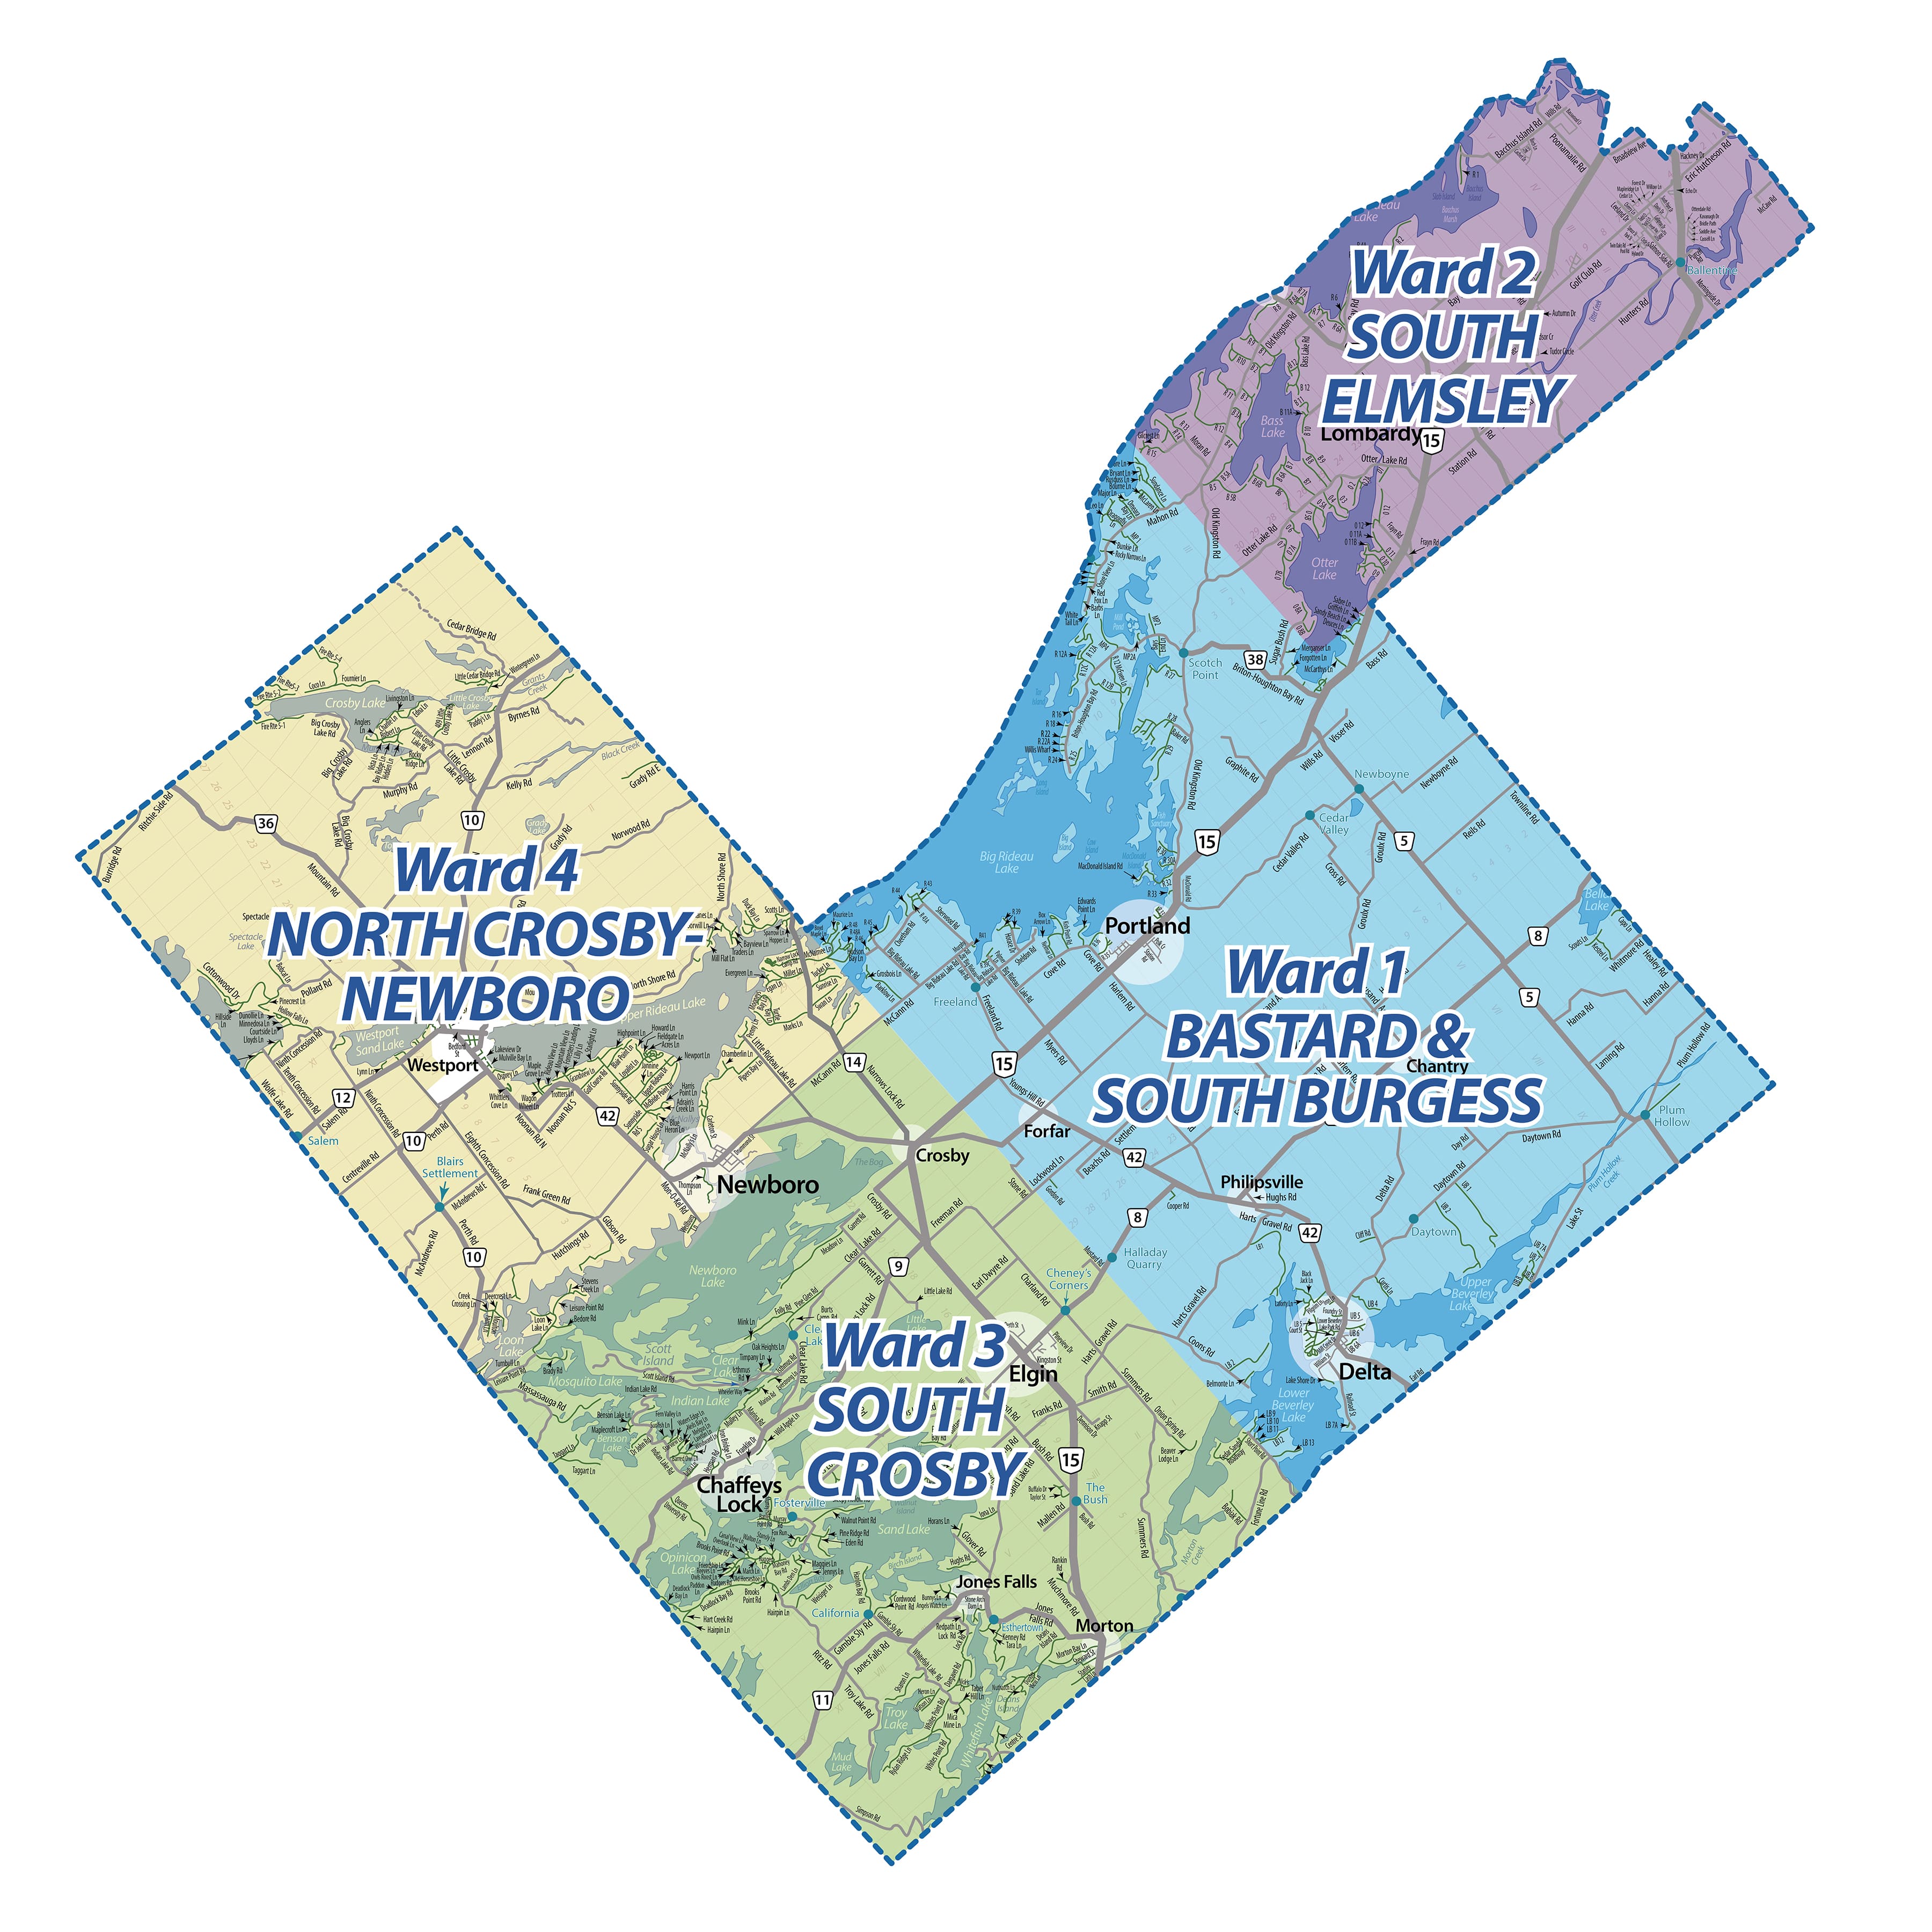 Map of Rideau Lakes Township showing the 4 ward boundaries